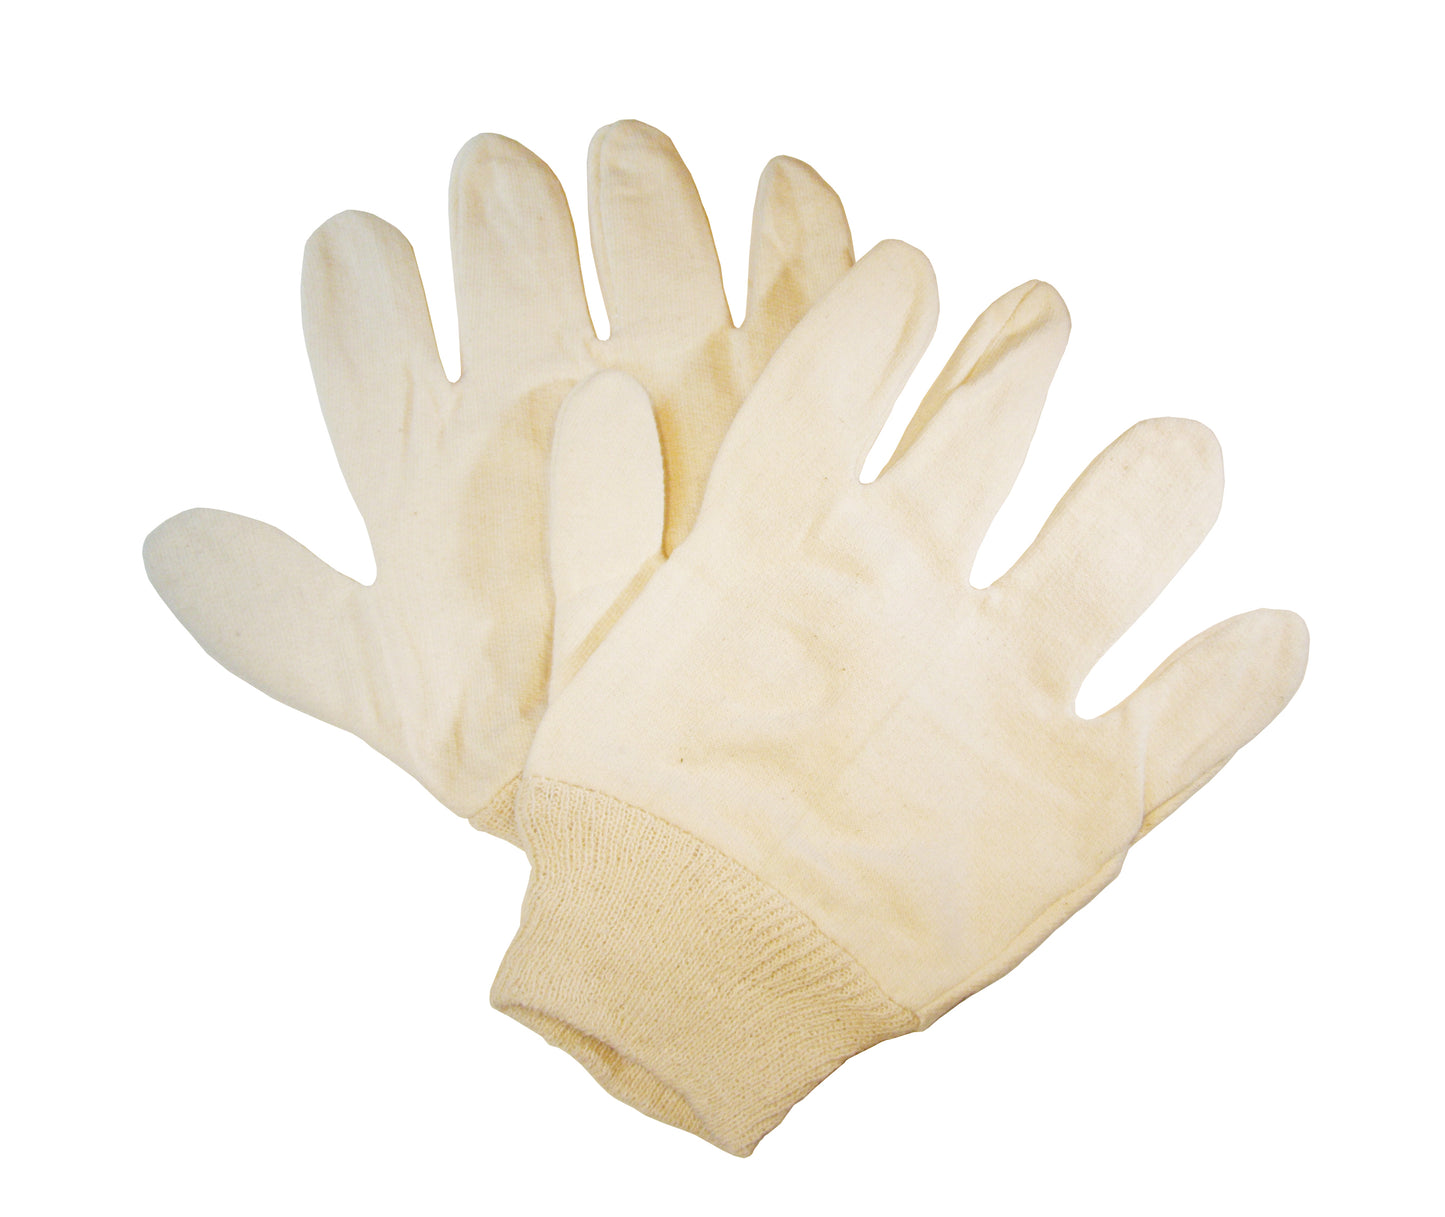 Jersey Knit Gloves, Large, White, 100% Cotton - KC9405